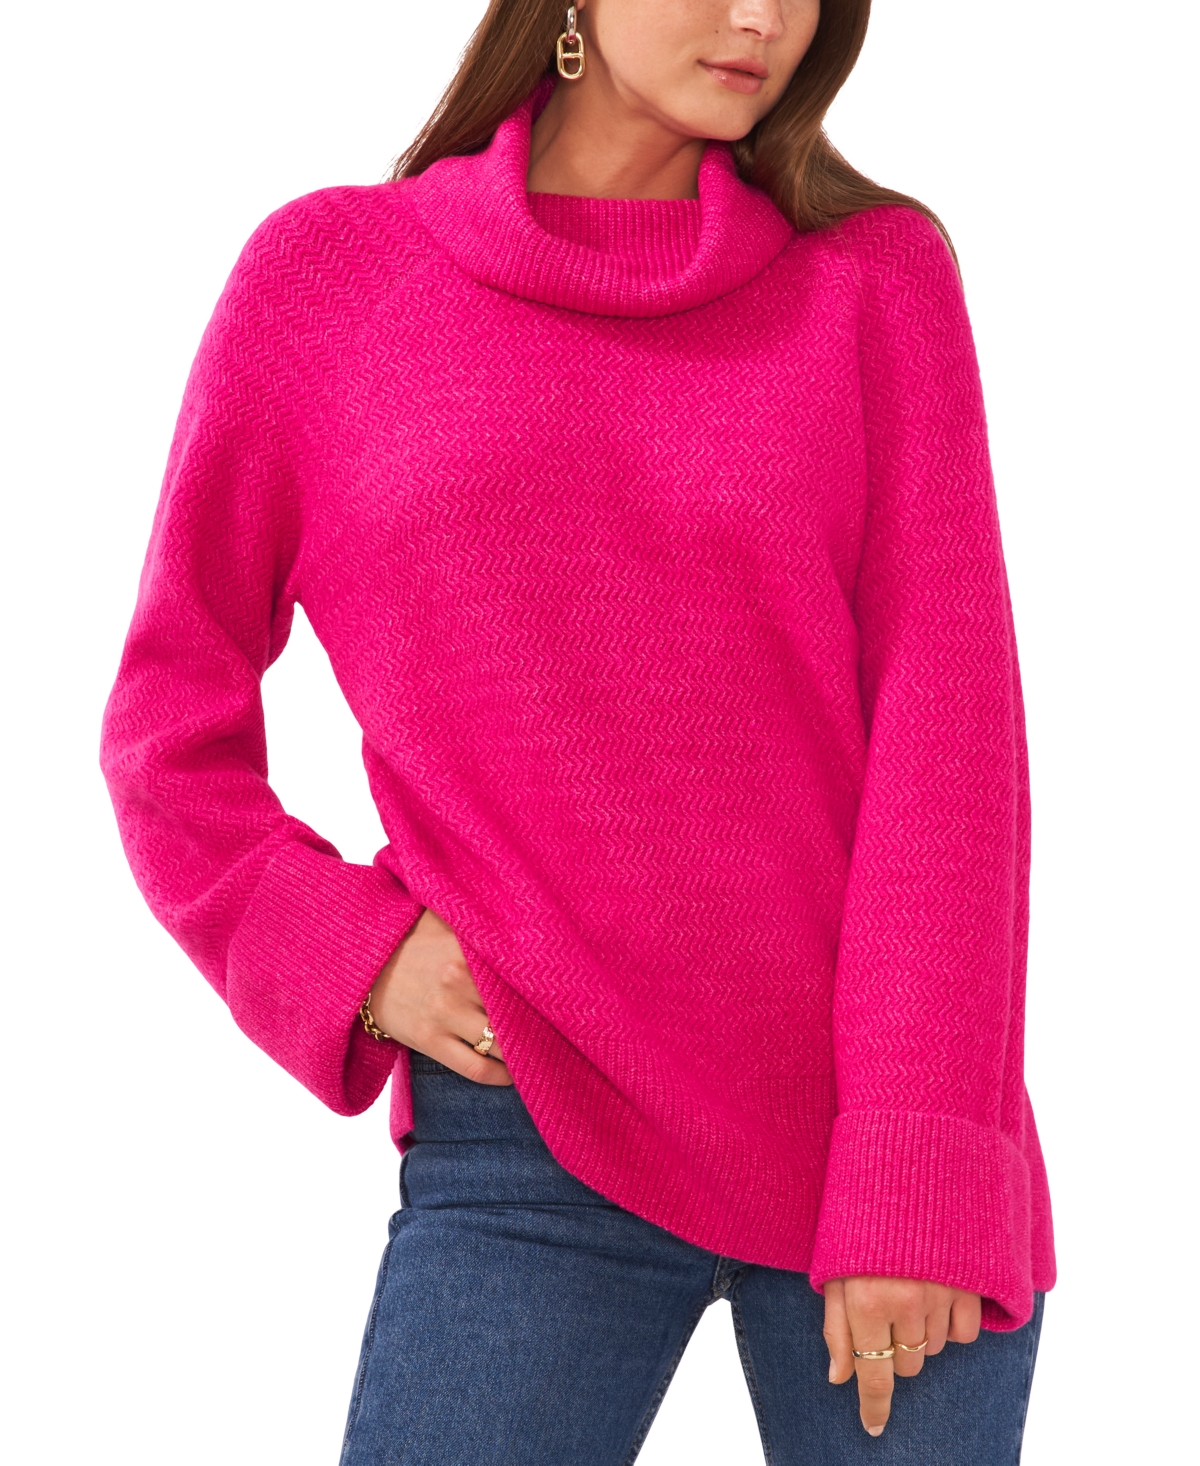 Vince Camuto Women's Turtleneck Cuffed Tunic Sweater